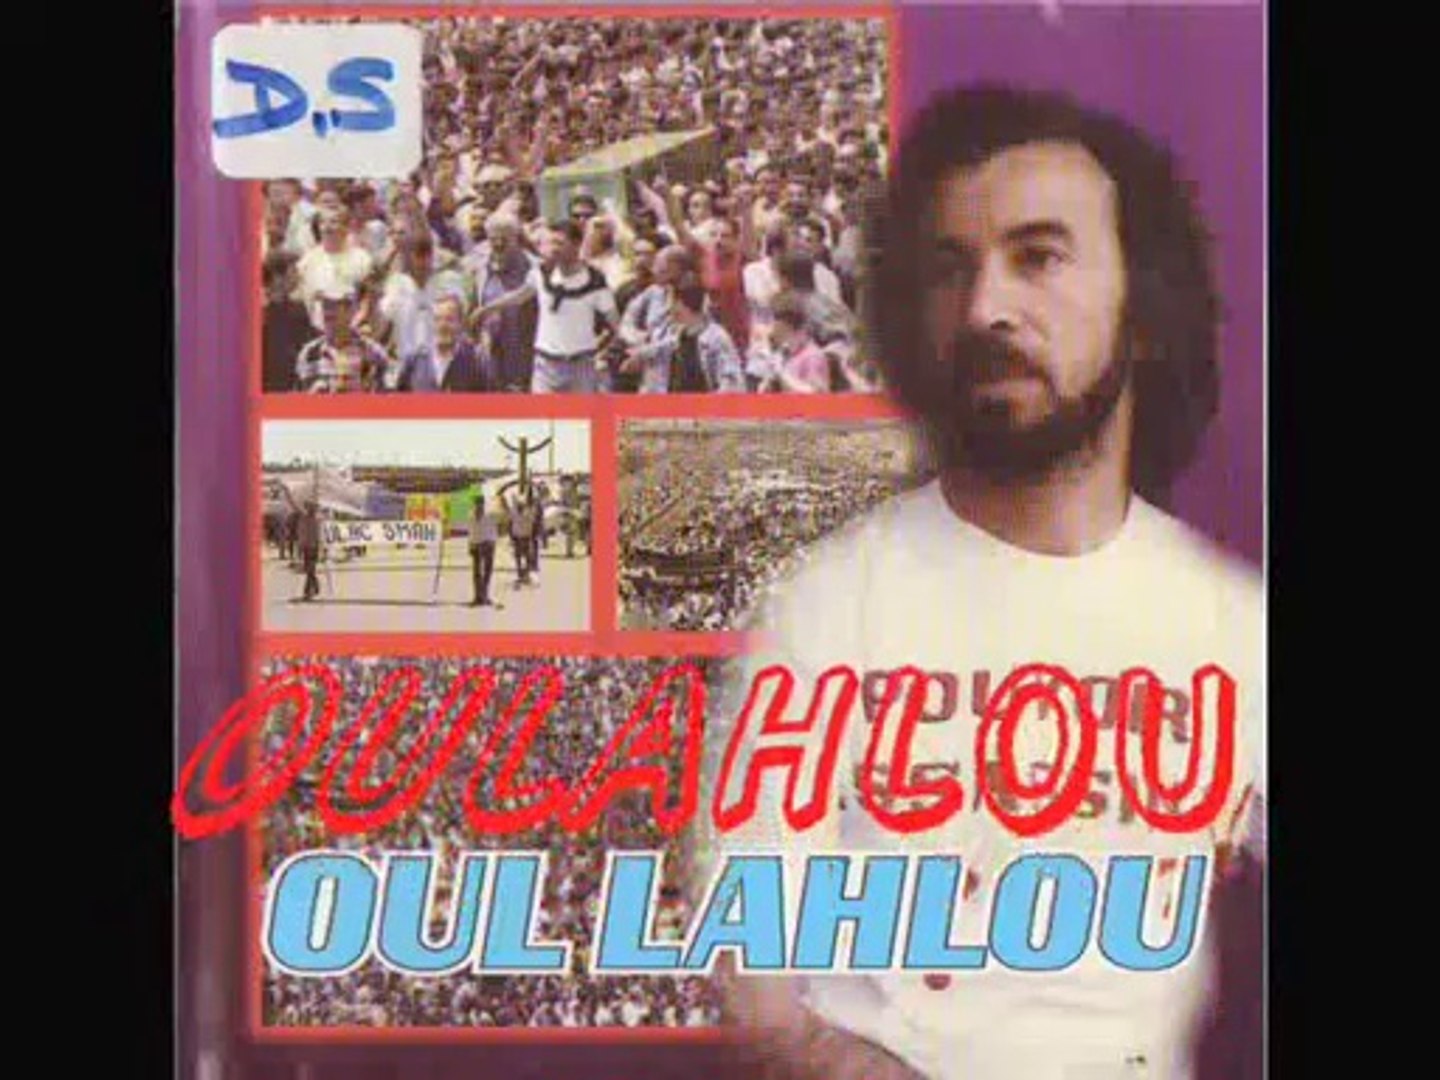 Oulahlou "L'Australie" (moderne Kabyle) 2001 - Vidéo Dailymotion